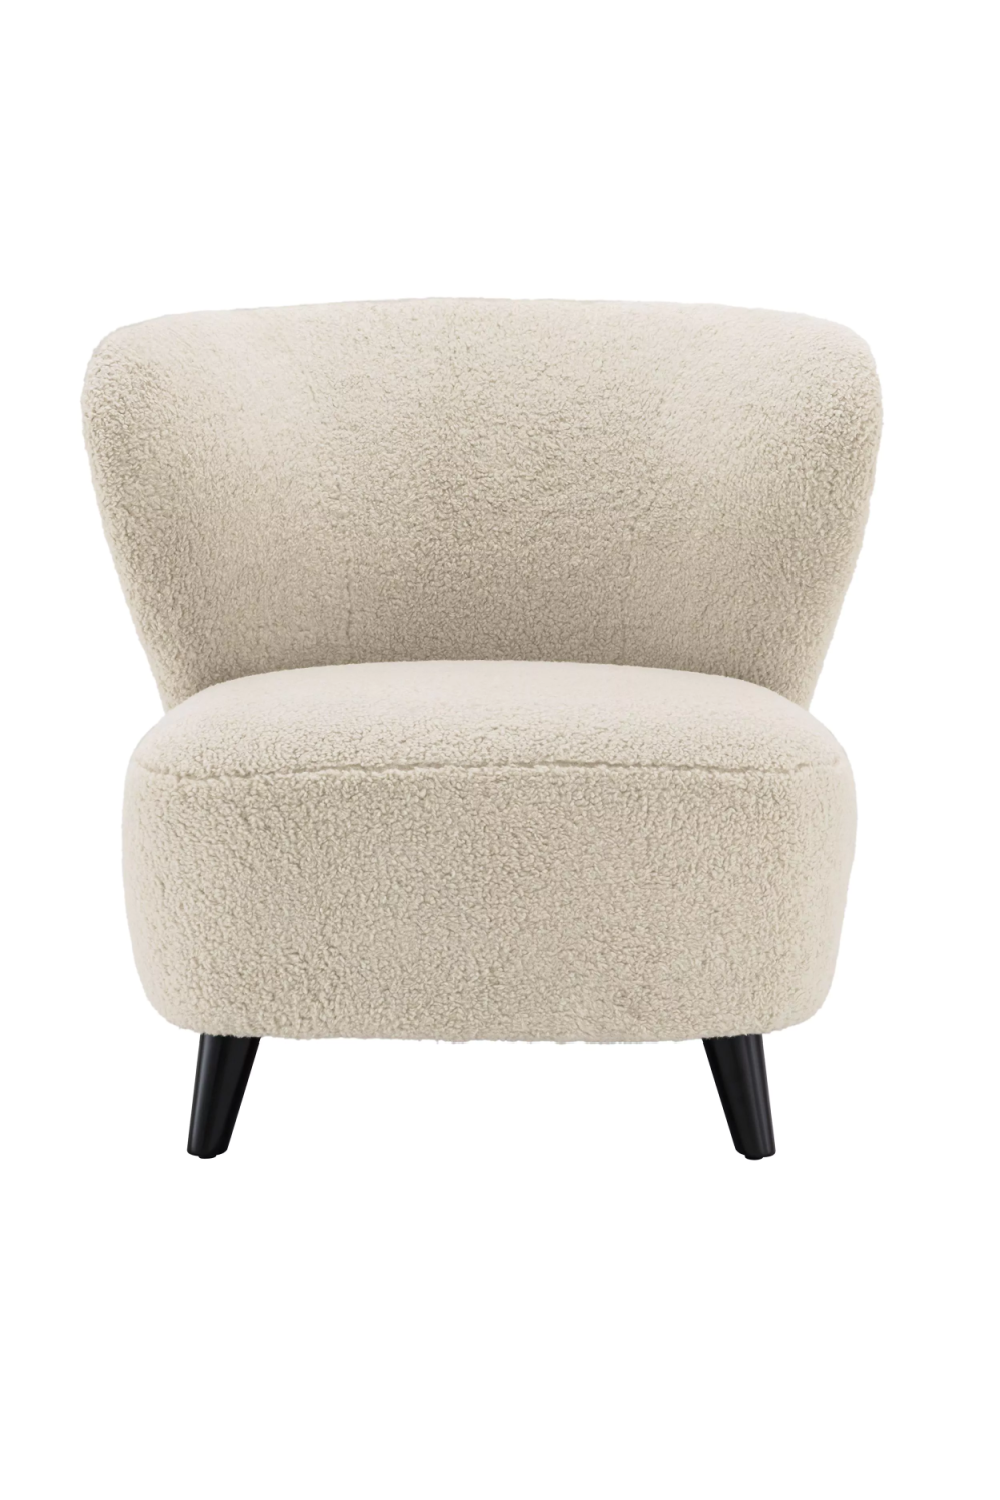 Cream Wingback Accent Chair | Eichholtz Hydra | Oroa.com